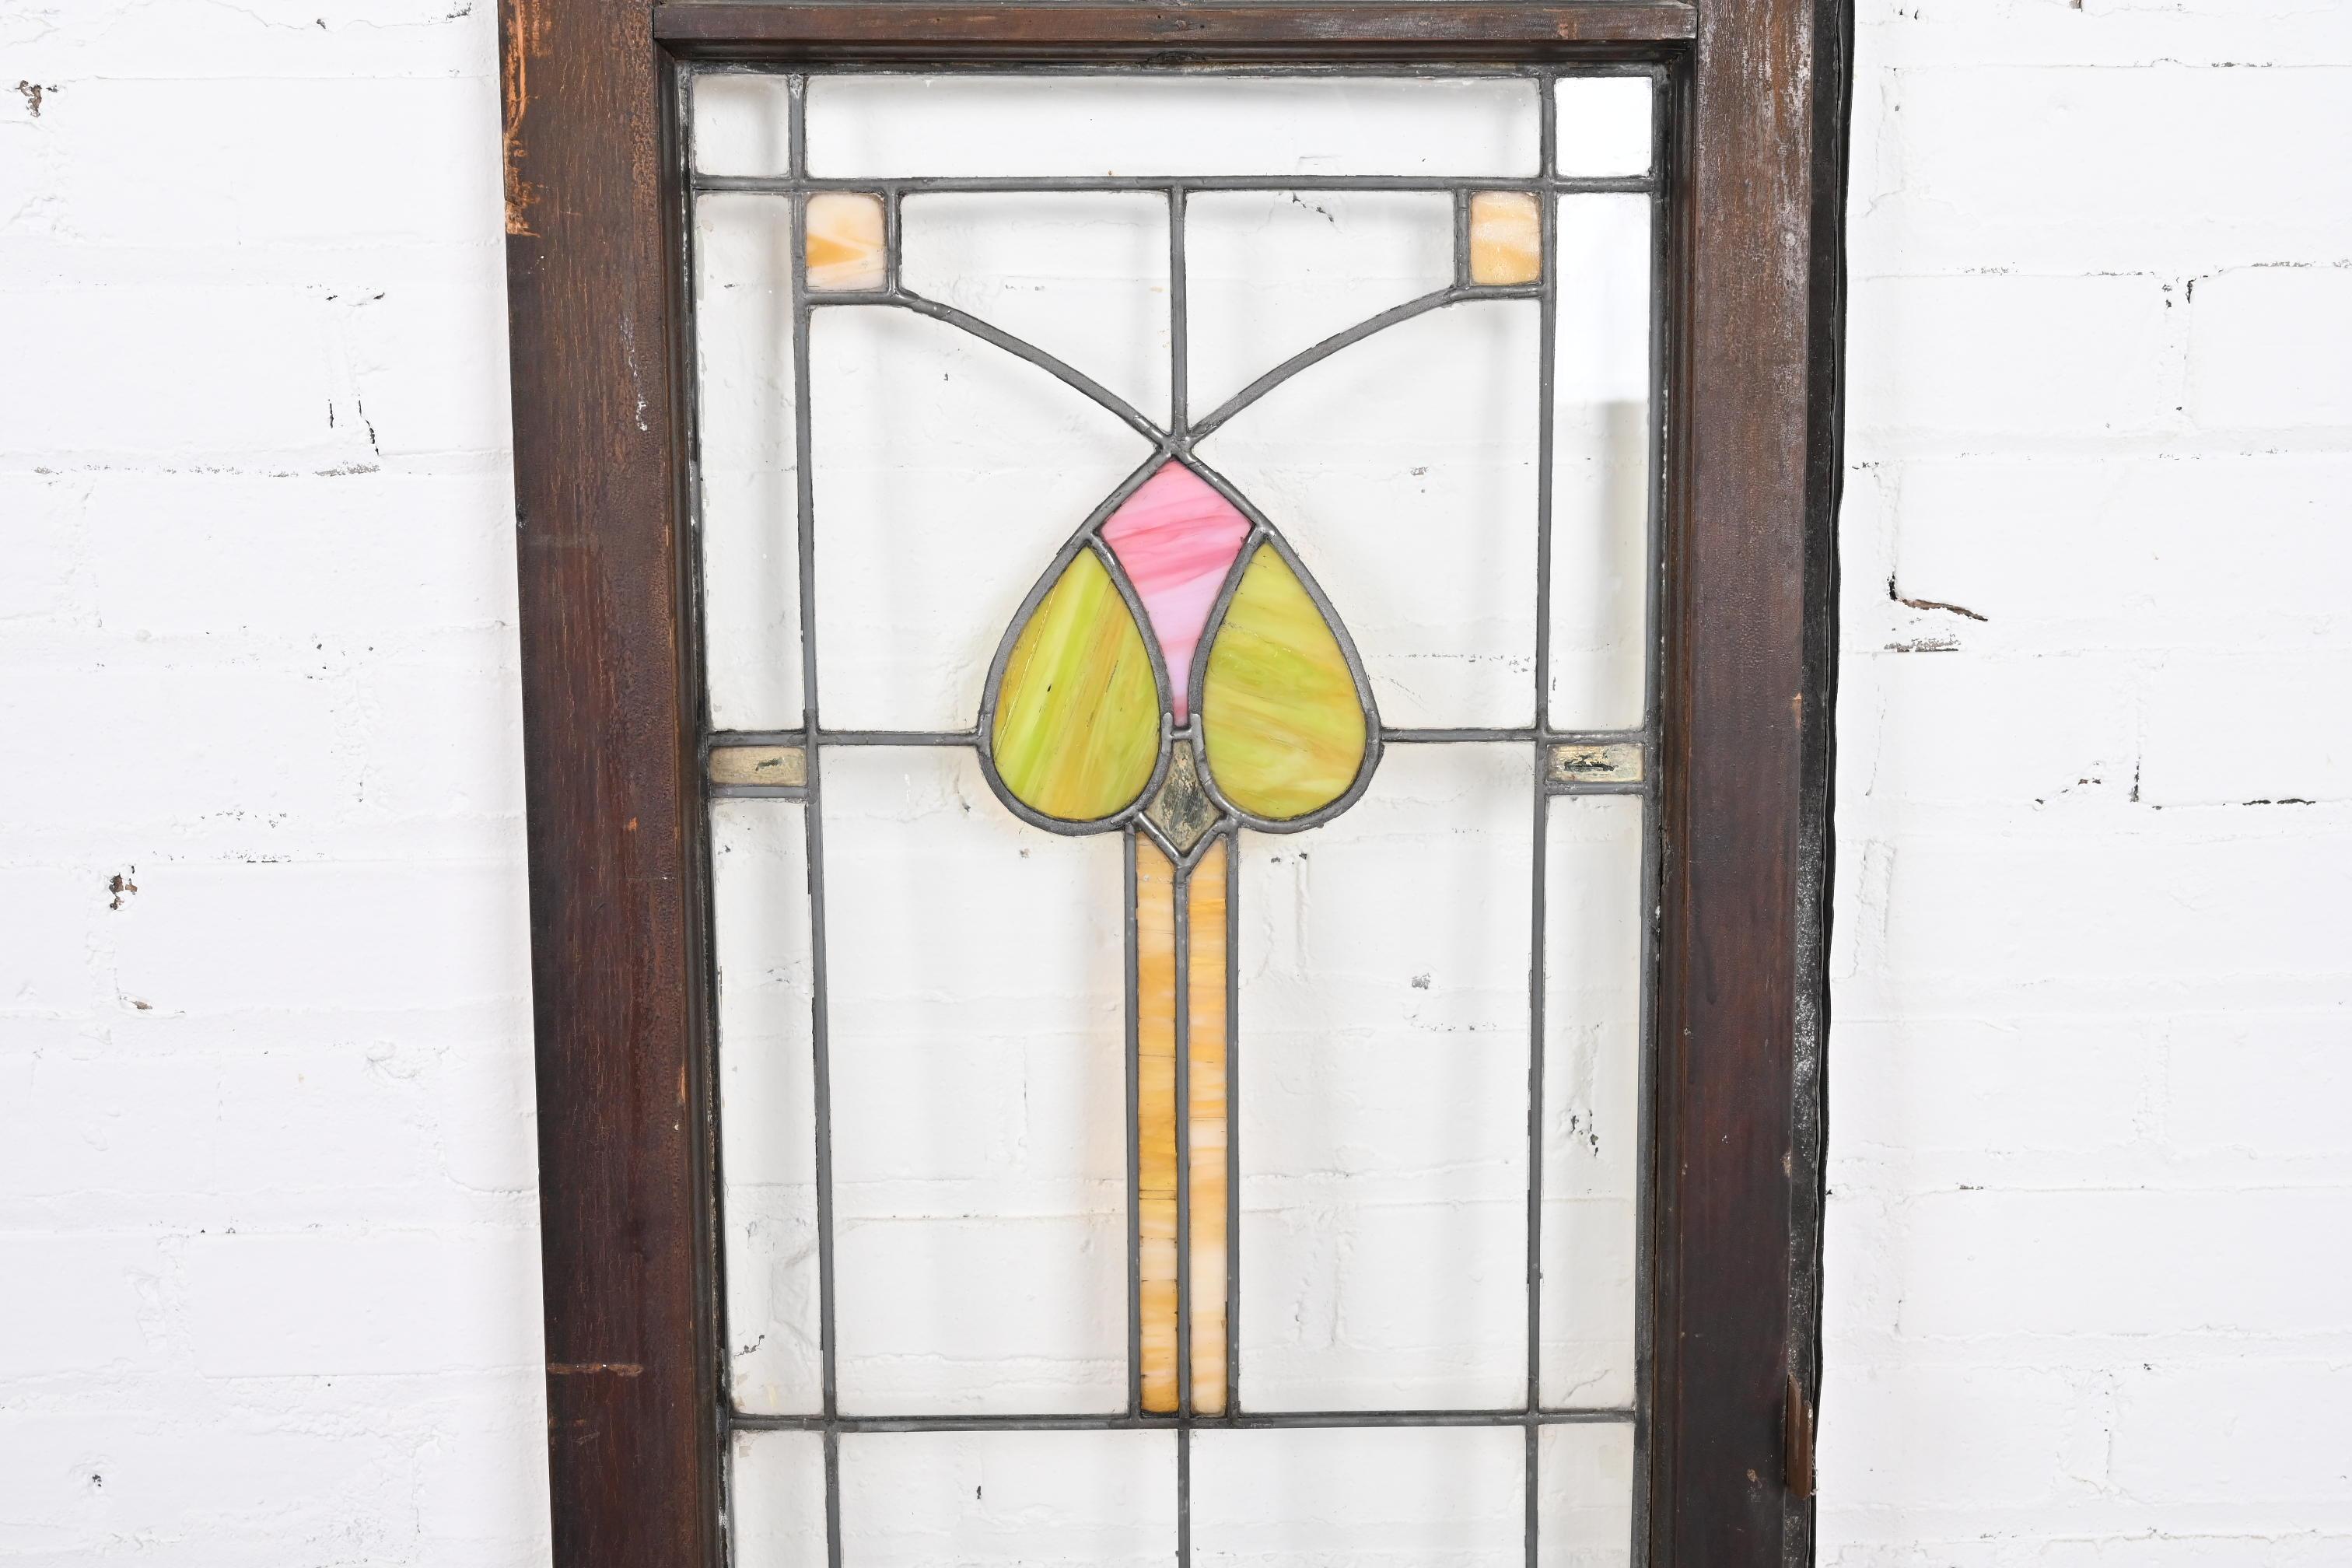 Frank Lloyd Wright Style Prairie School Arts & Crafts Stained Glass Window 2